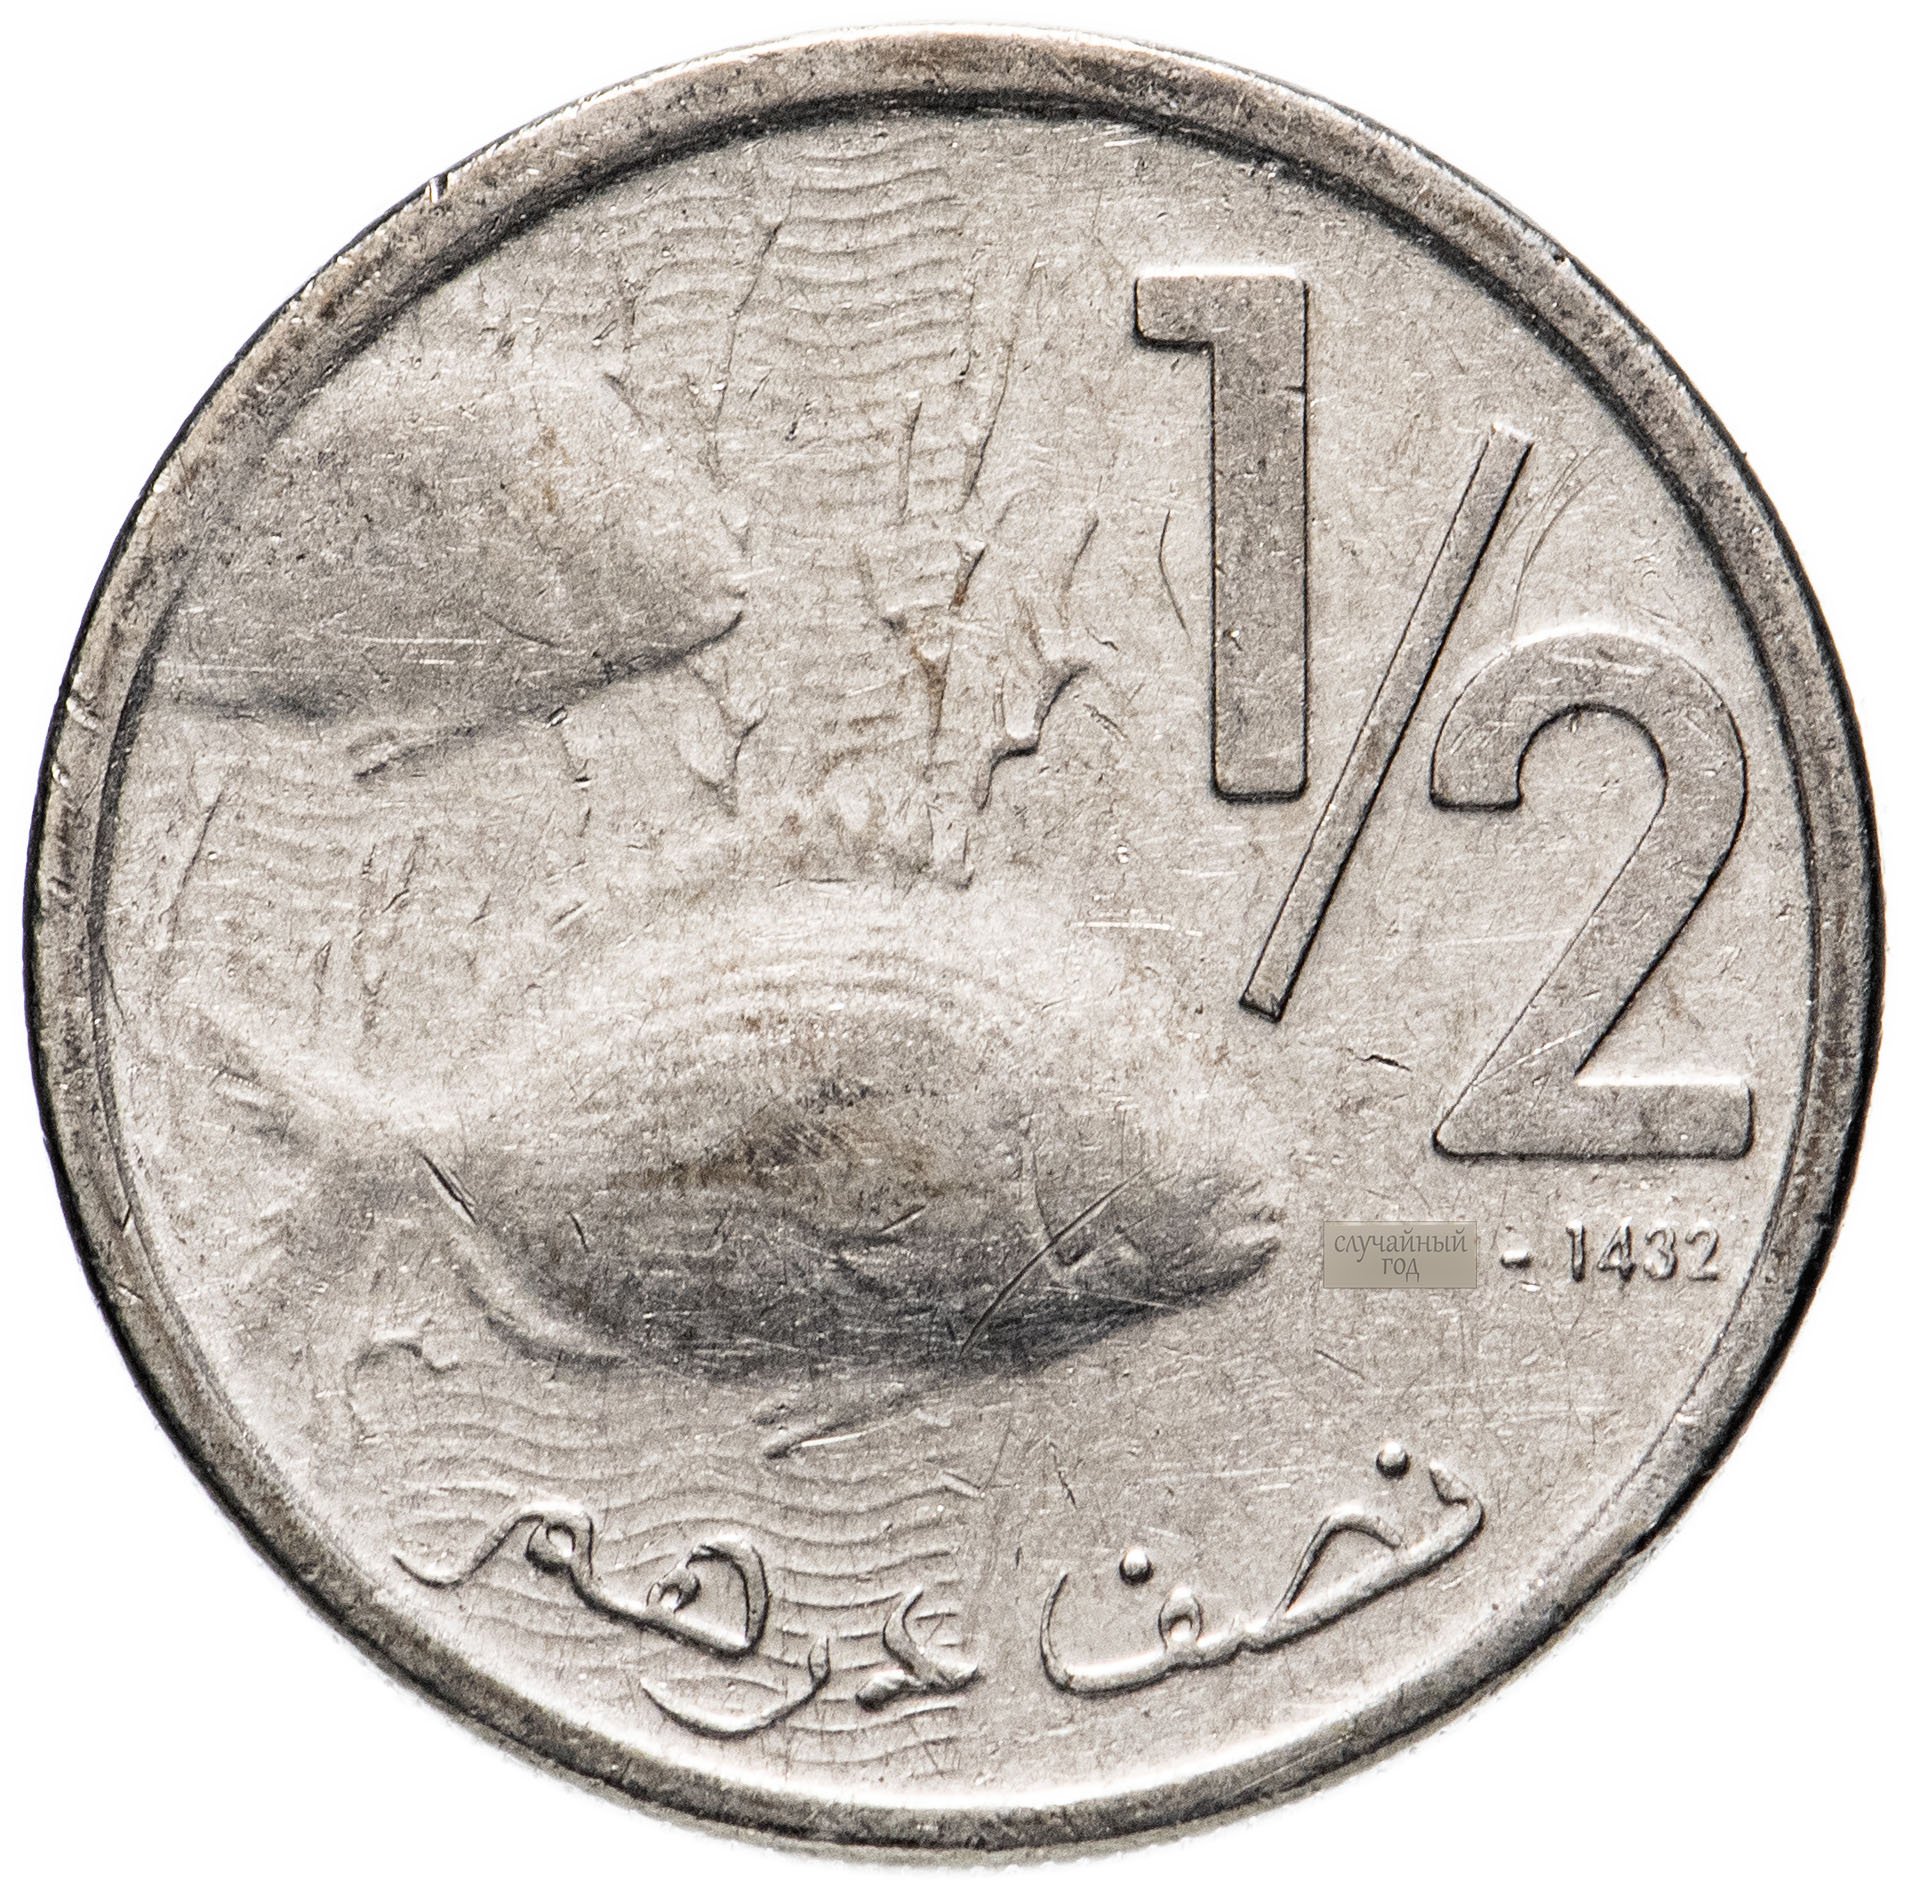 2 дирхама. 1/2 Дирхама Марокко. 2 Дирхама монета. Монеты Марокко. Монета 2011-1432.